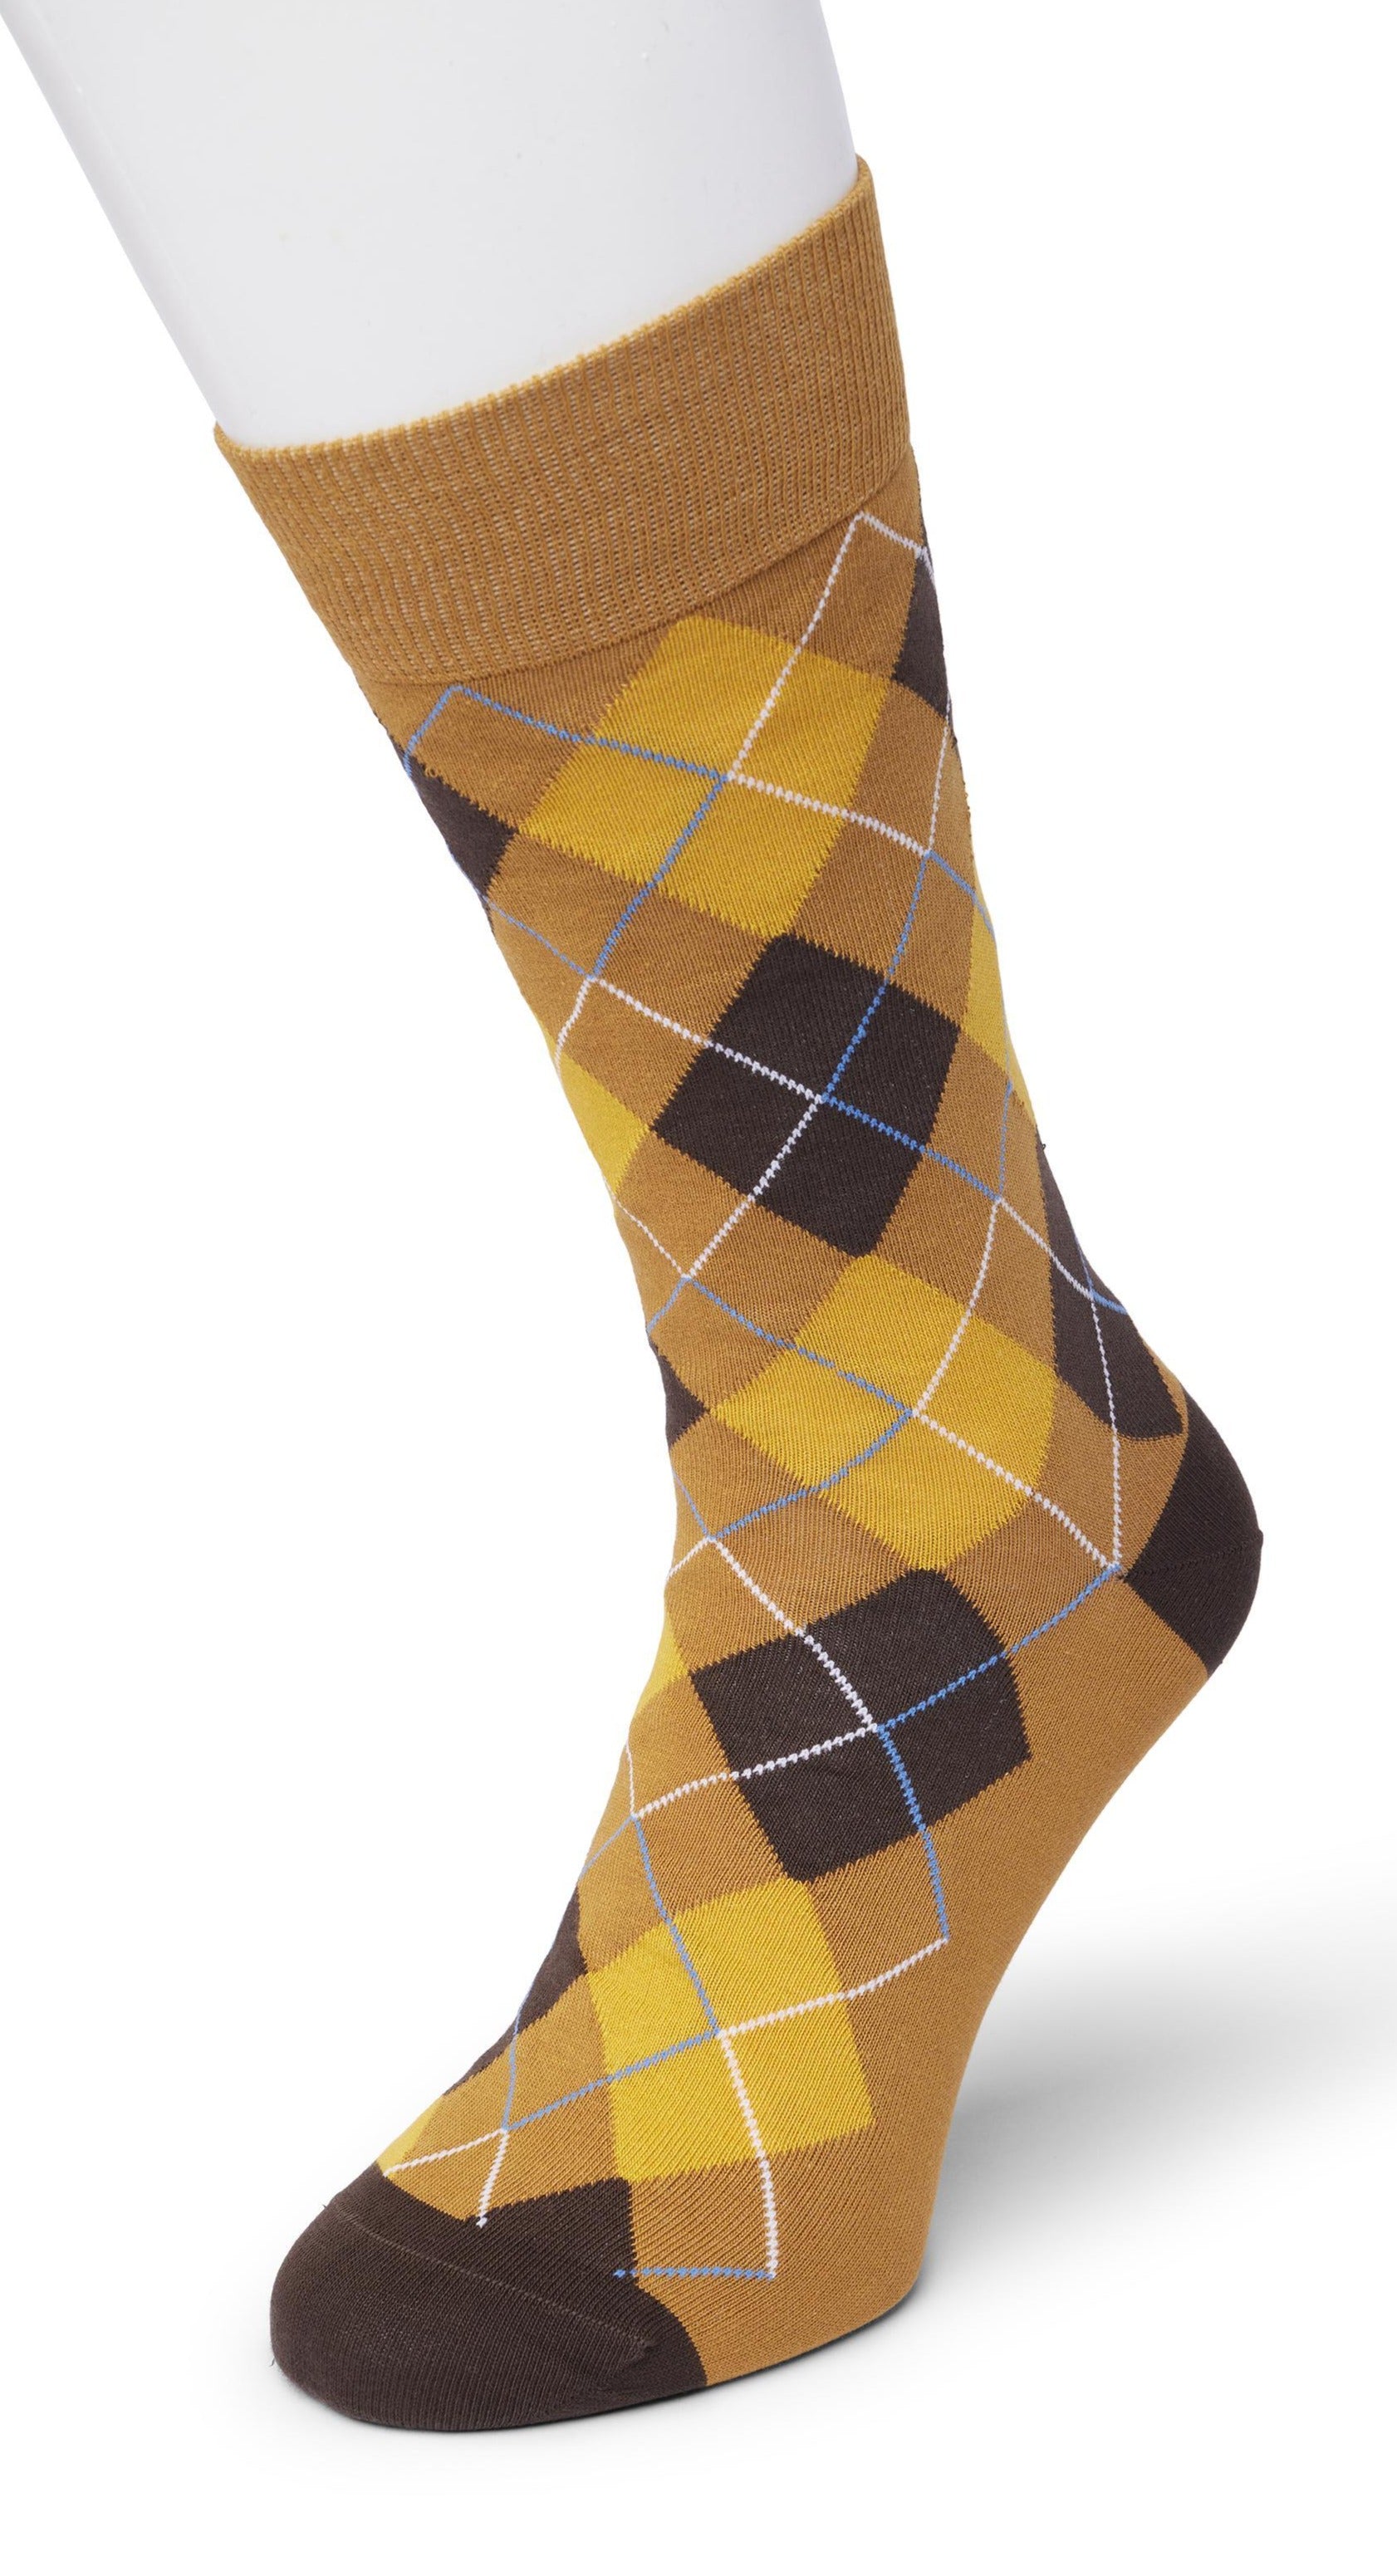 Bonnie Doon BP212113 Argyle Sock - Men's mustard yellow, rust orange, brown and blue cotton ankle socks with a golf style diamond argyle tartan check pattern.